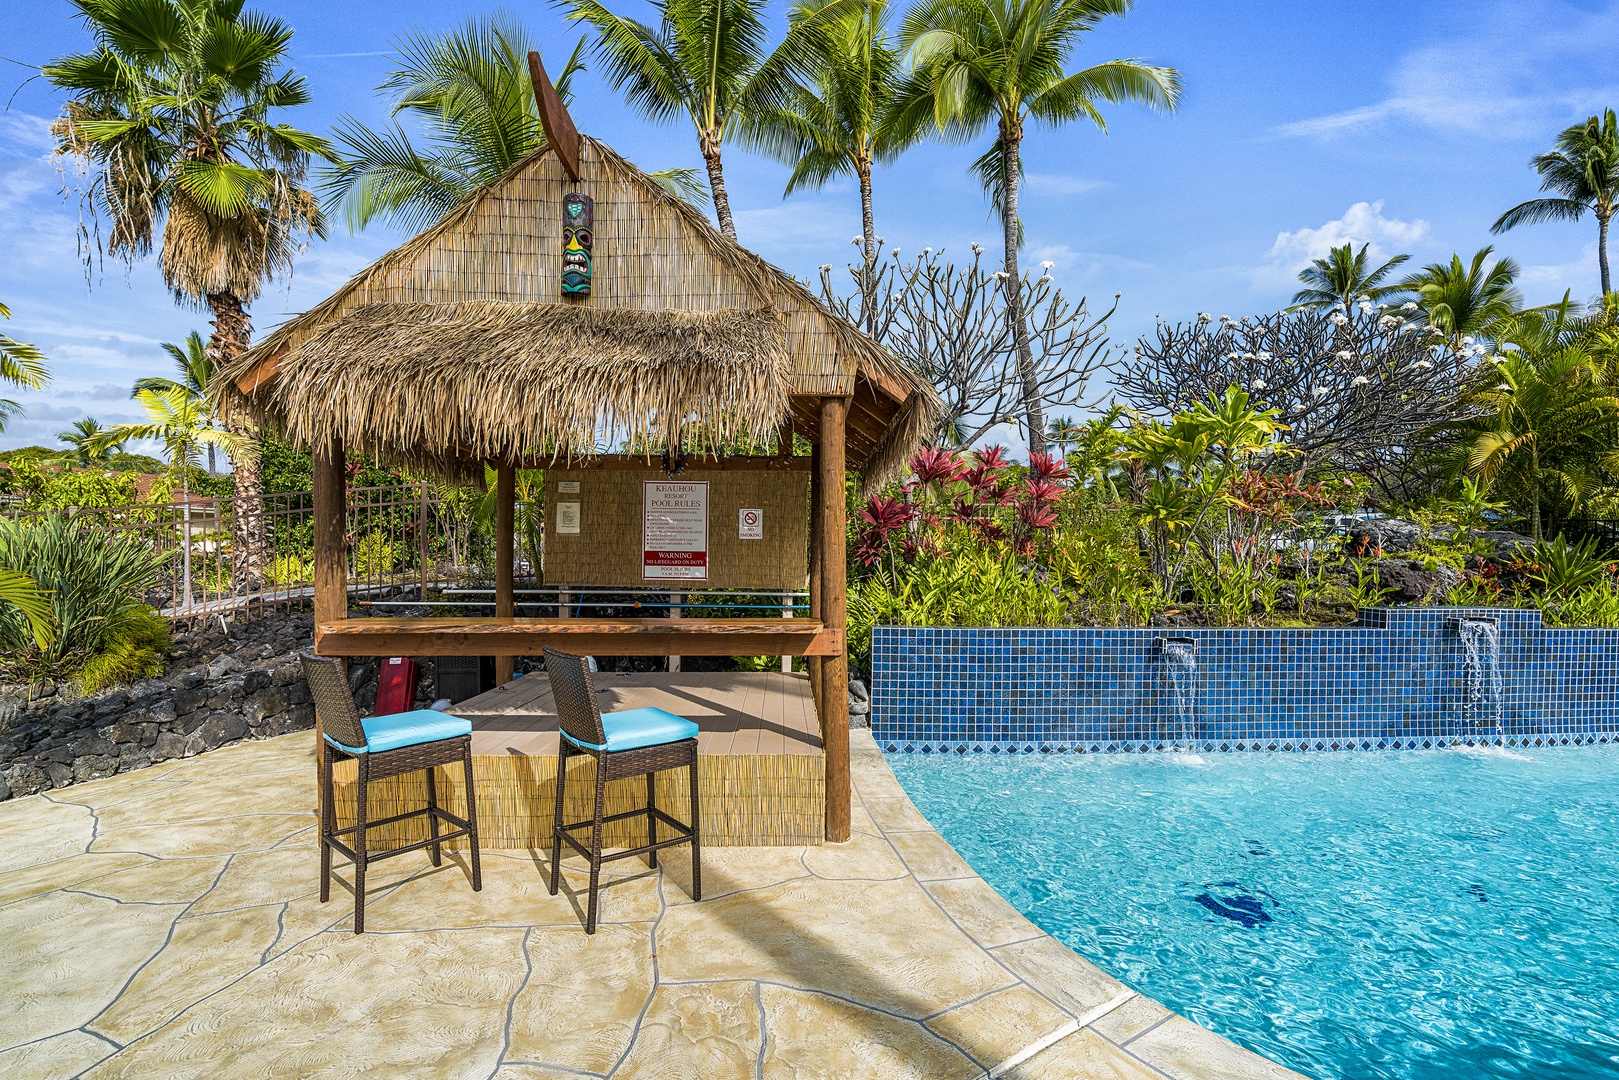 Kailua Kona Vacation Rentals, Keauhou Resort 104 - Tiki bar seating poolside